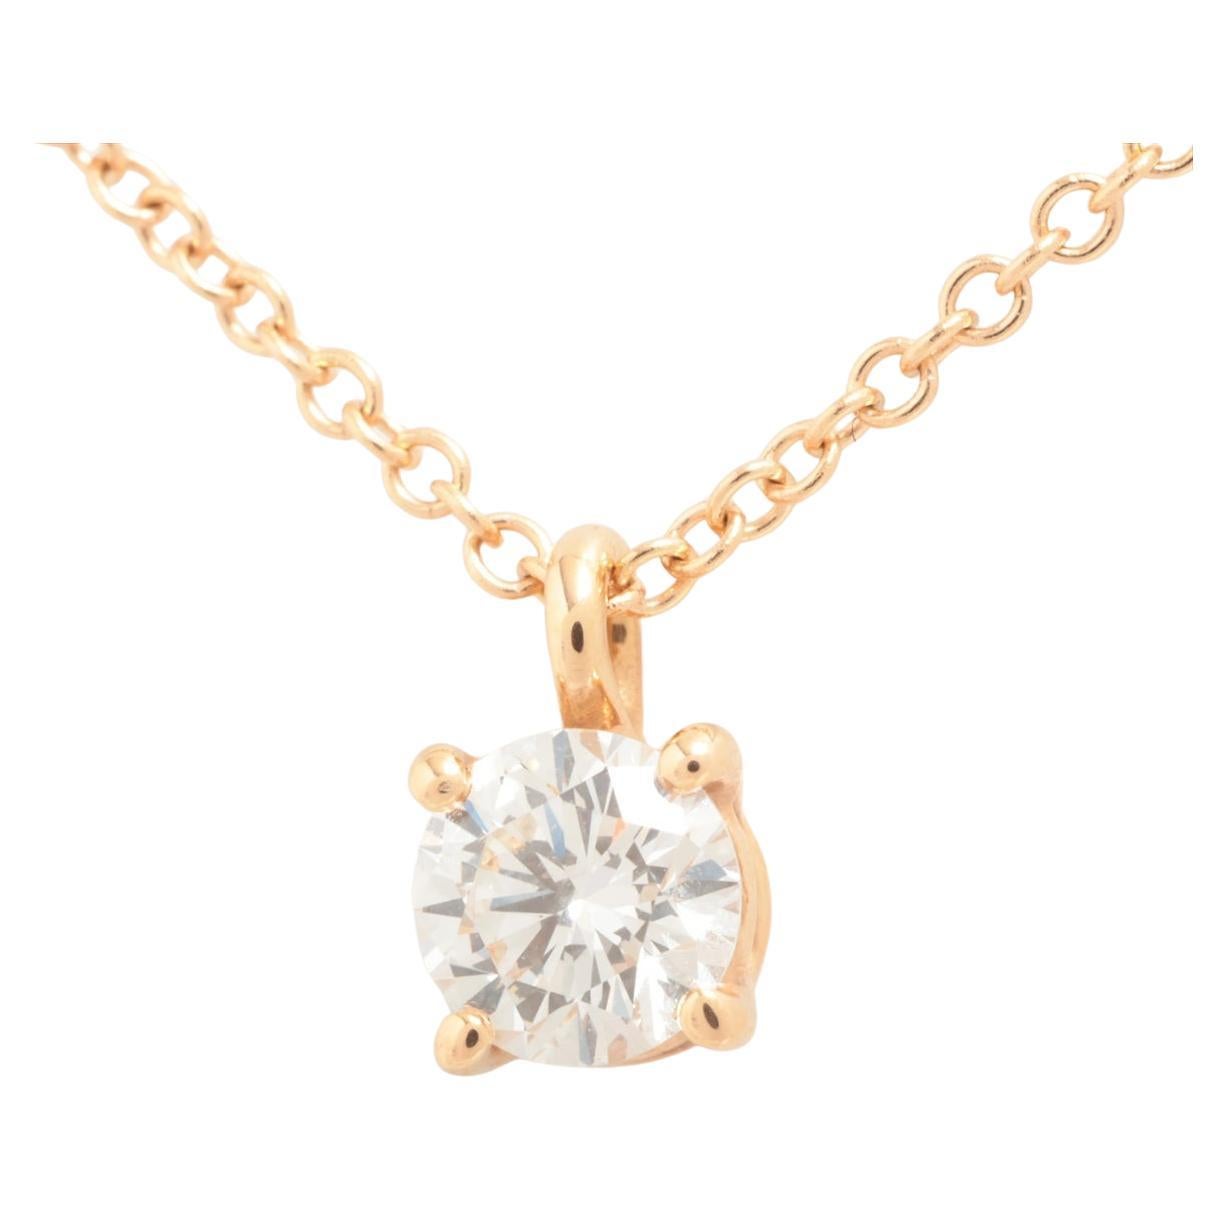  Tiffany Solitaire Diamond Necklace 